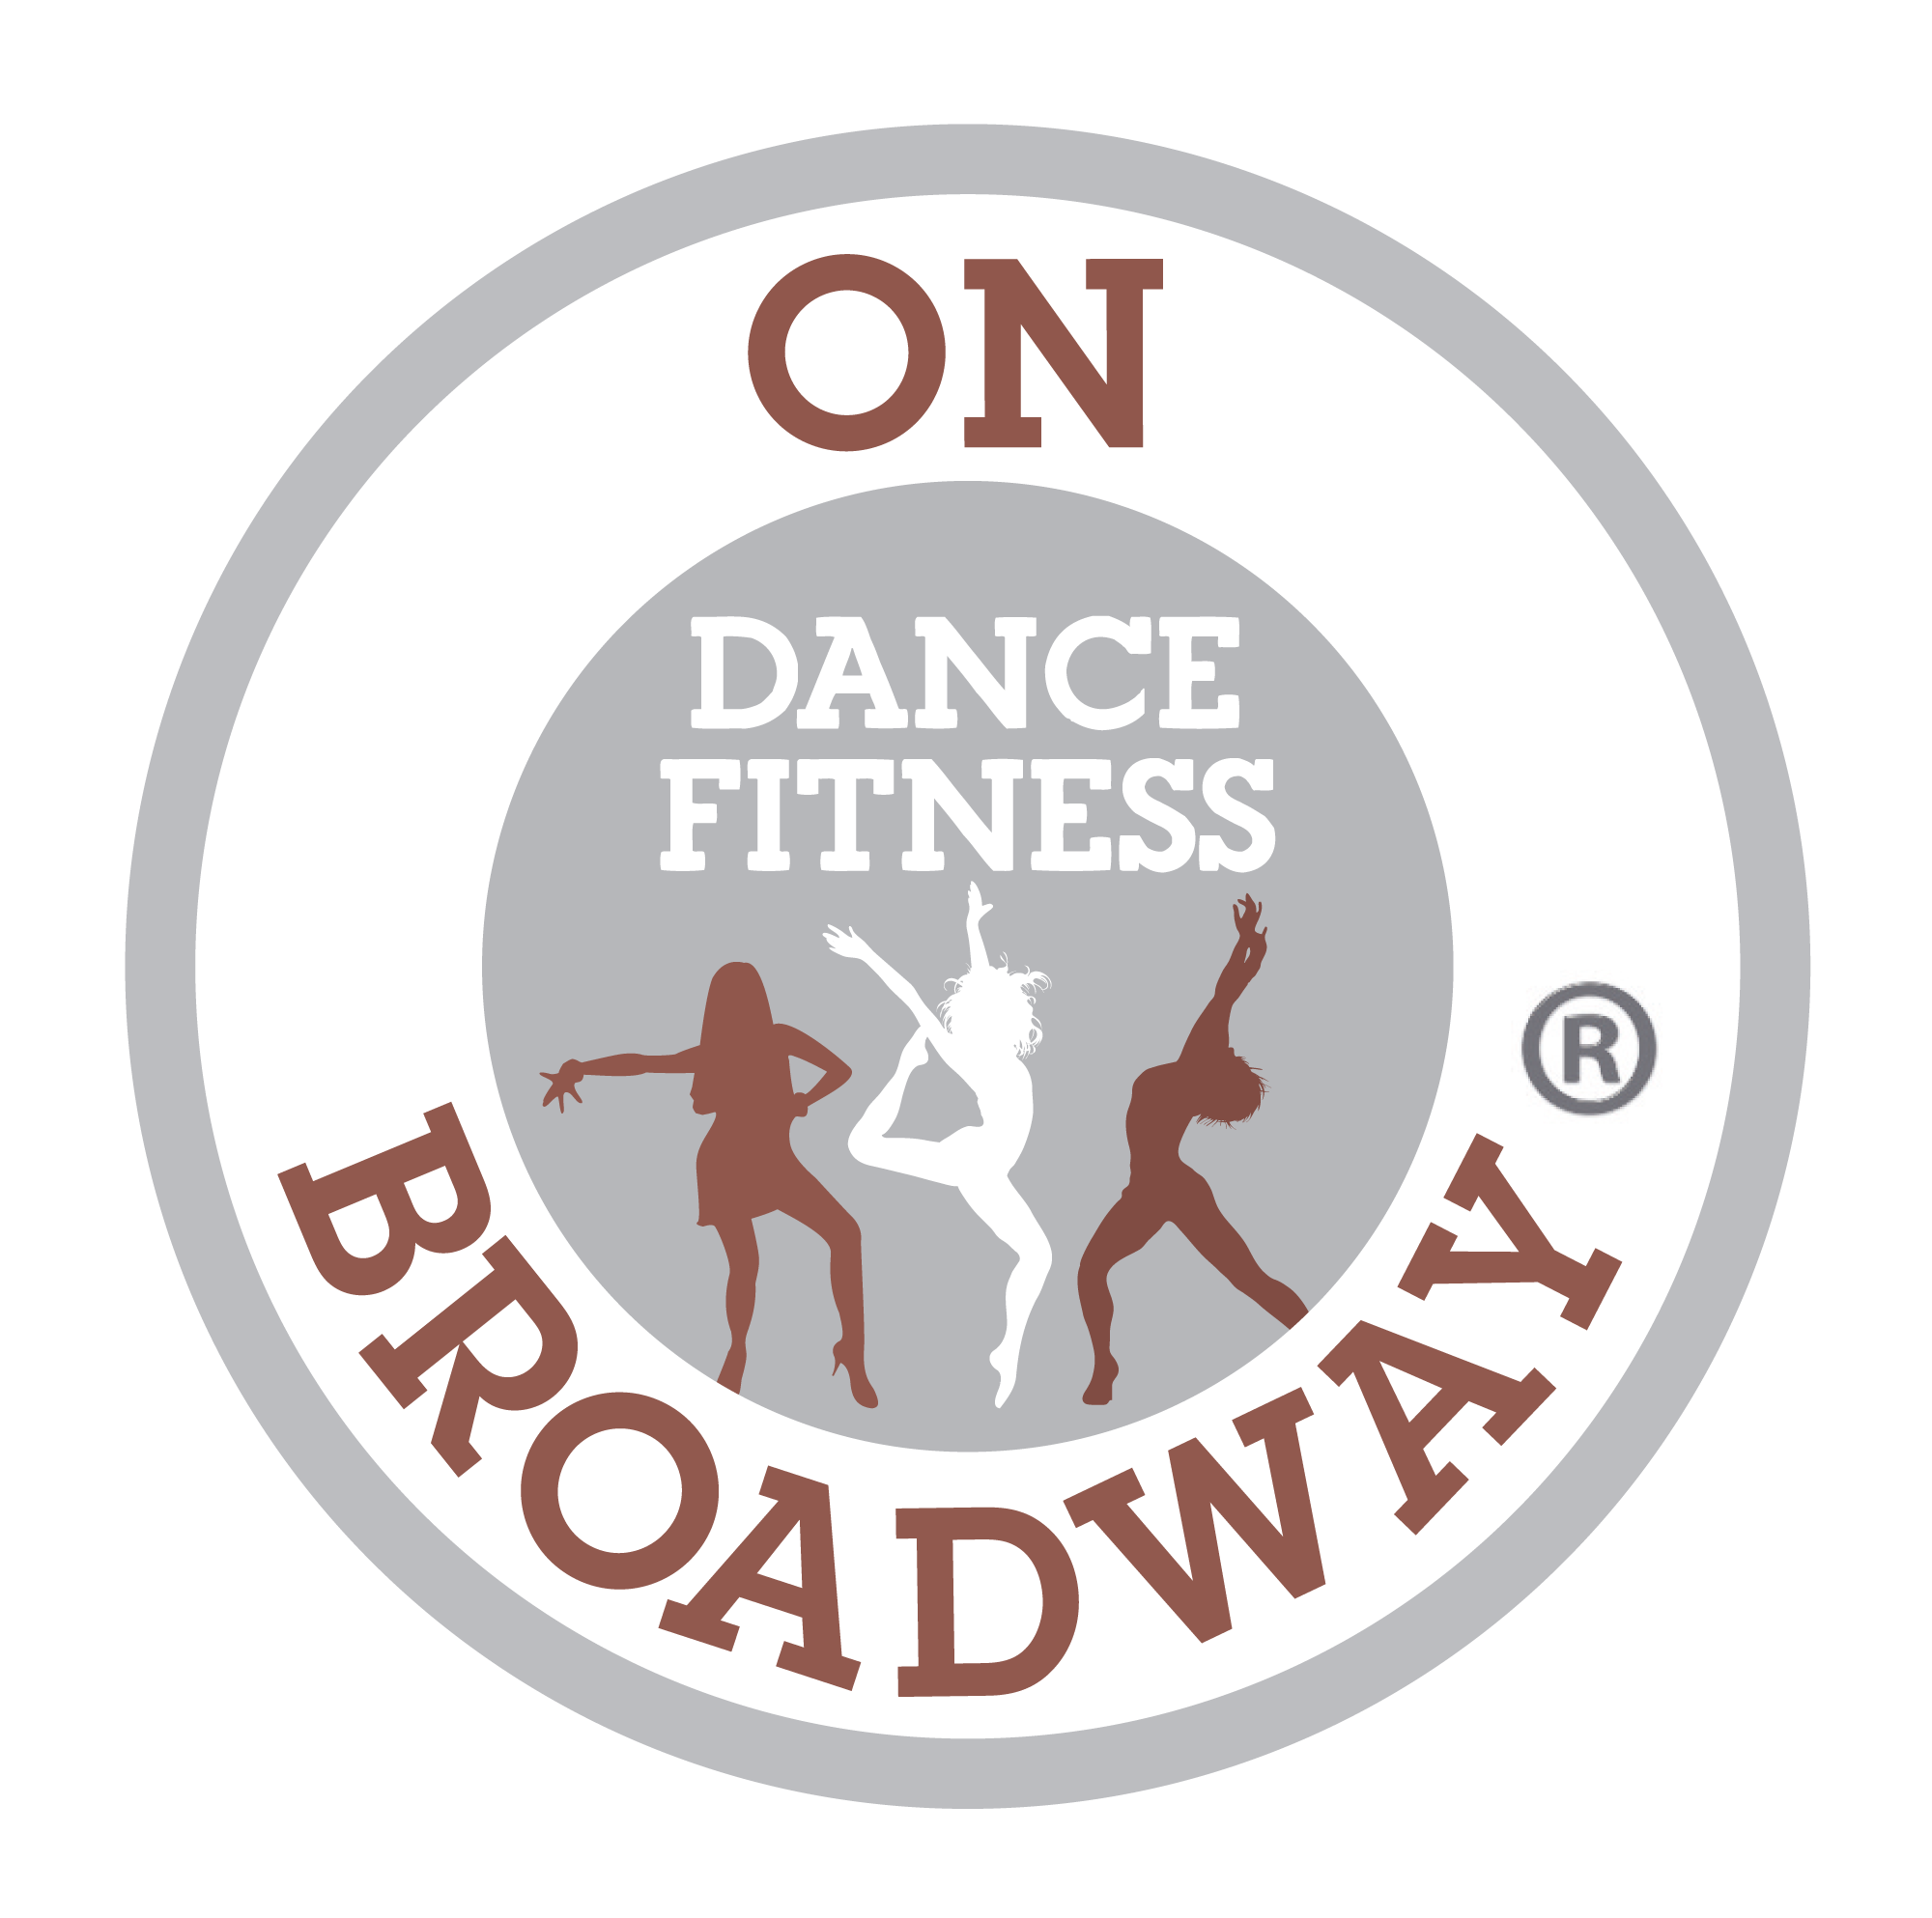 On Broadway Dance Fitness logo